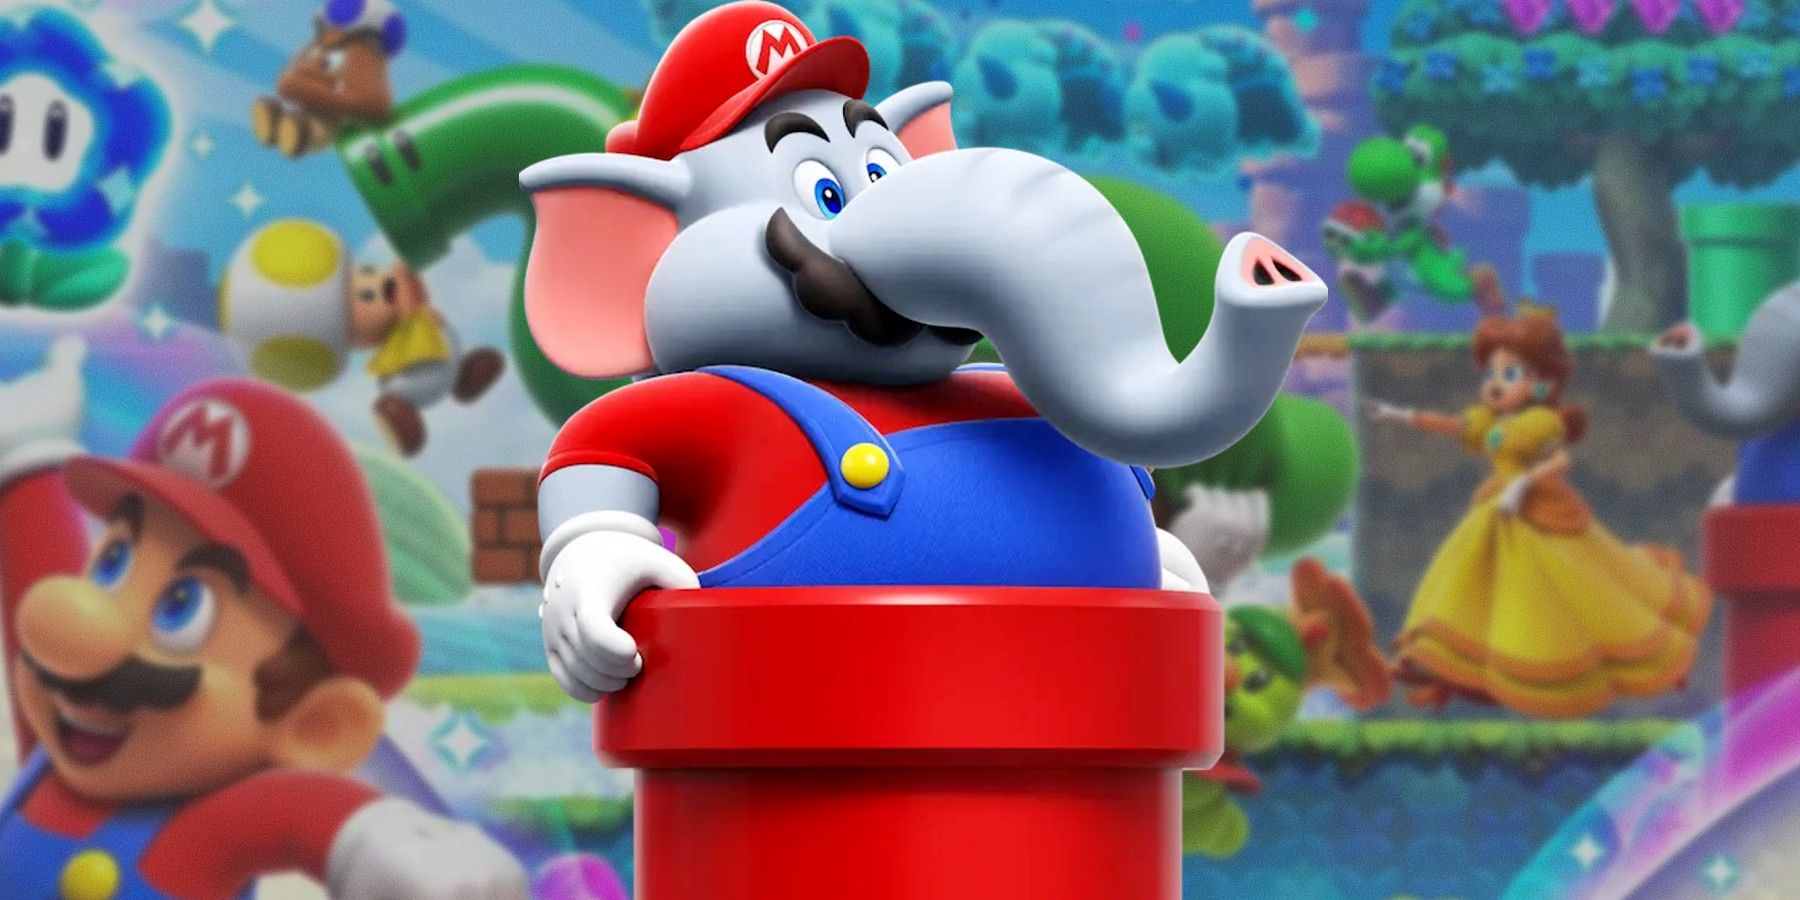 All Power-Ups in Super Mario Bros Wonder